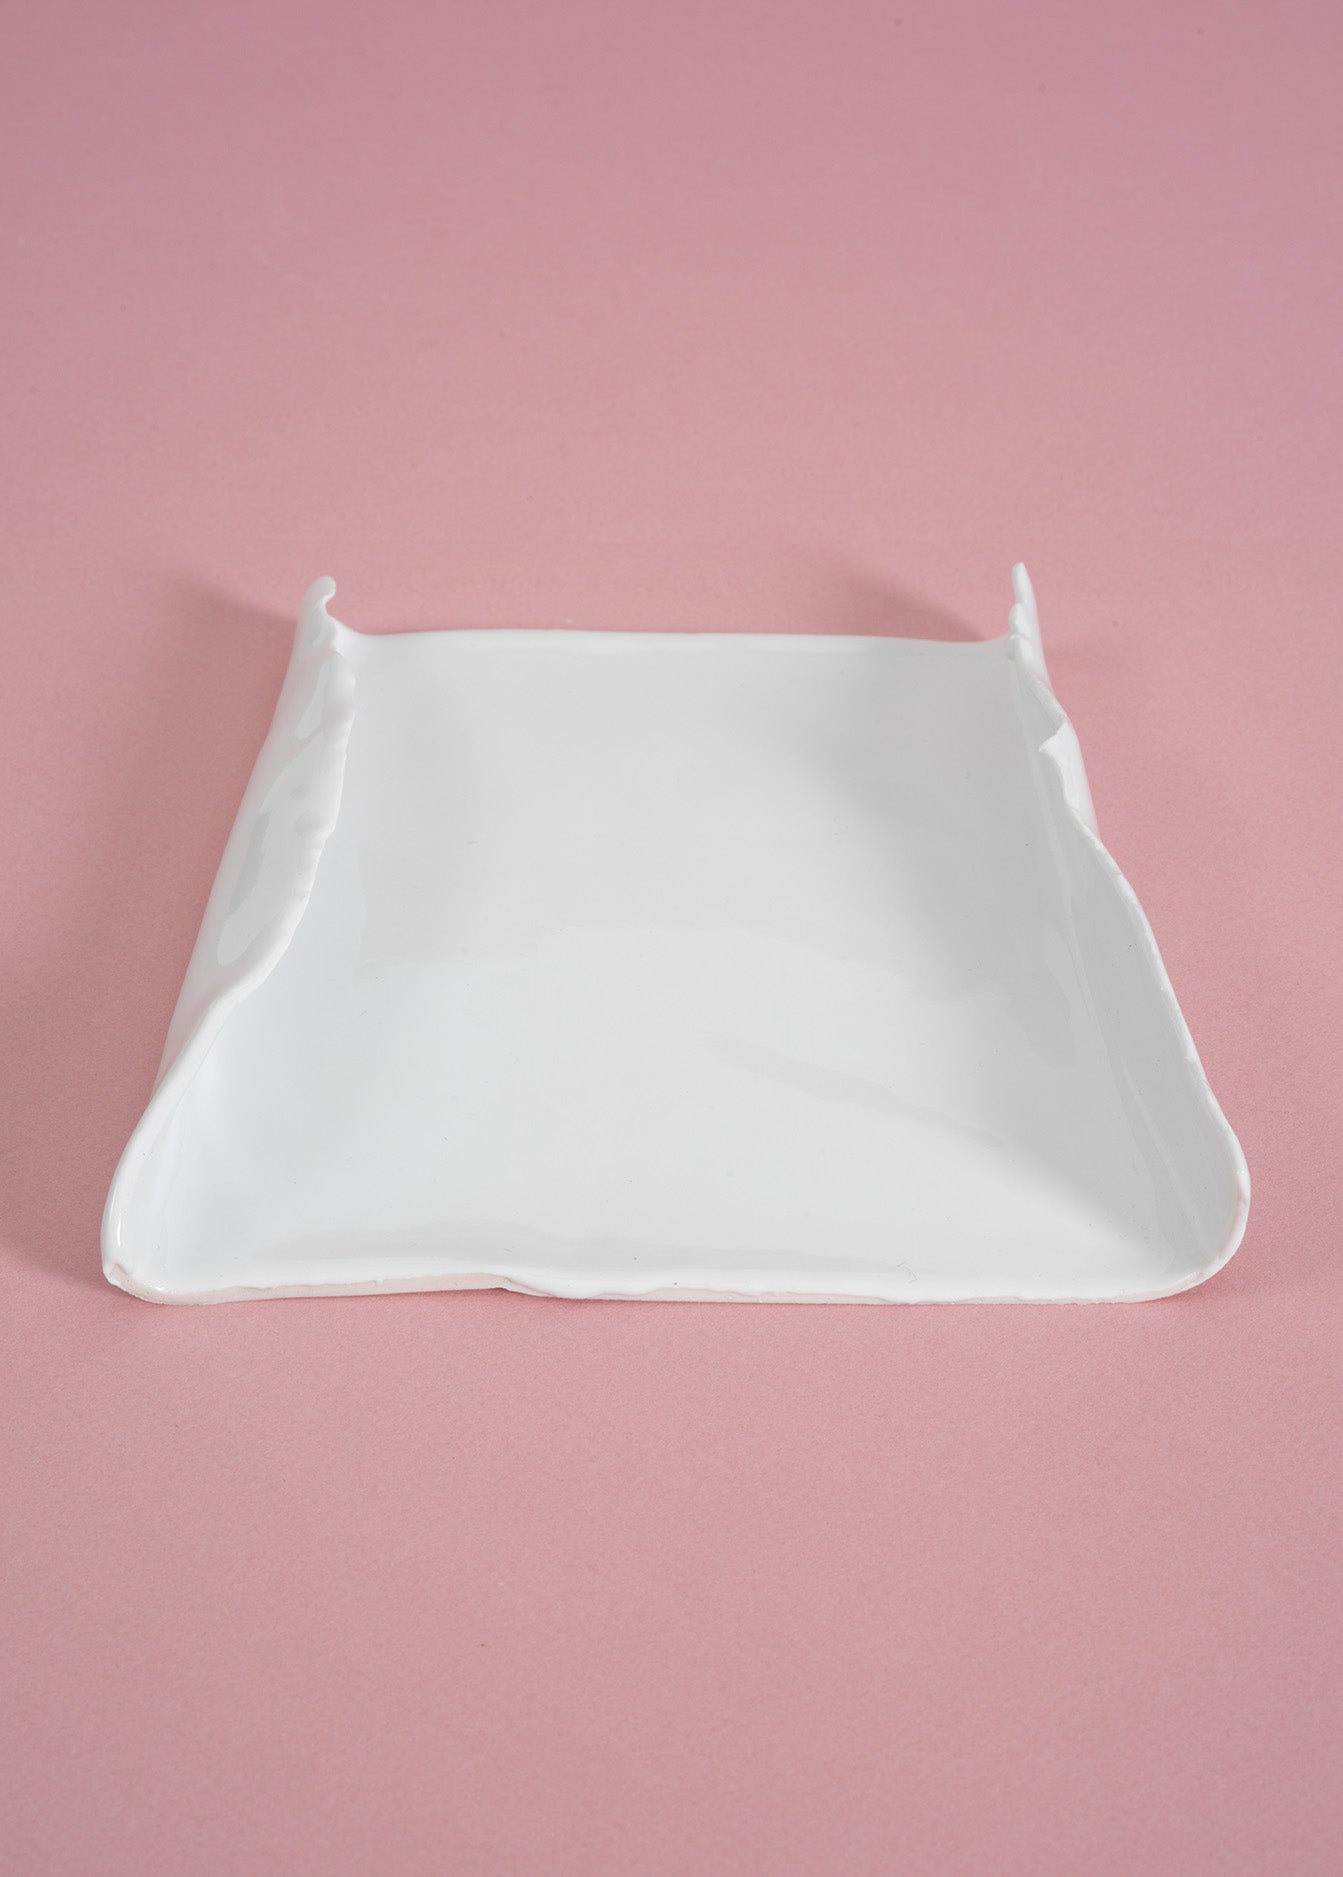 Christine Roland, ‘Thin porcelain tray’, 2019